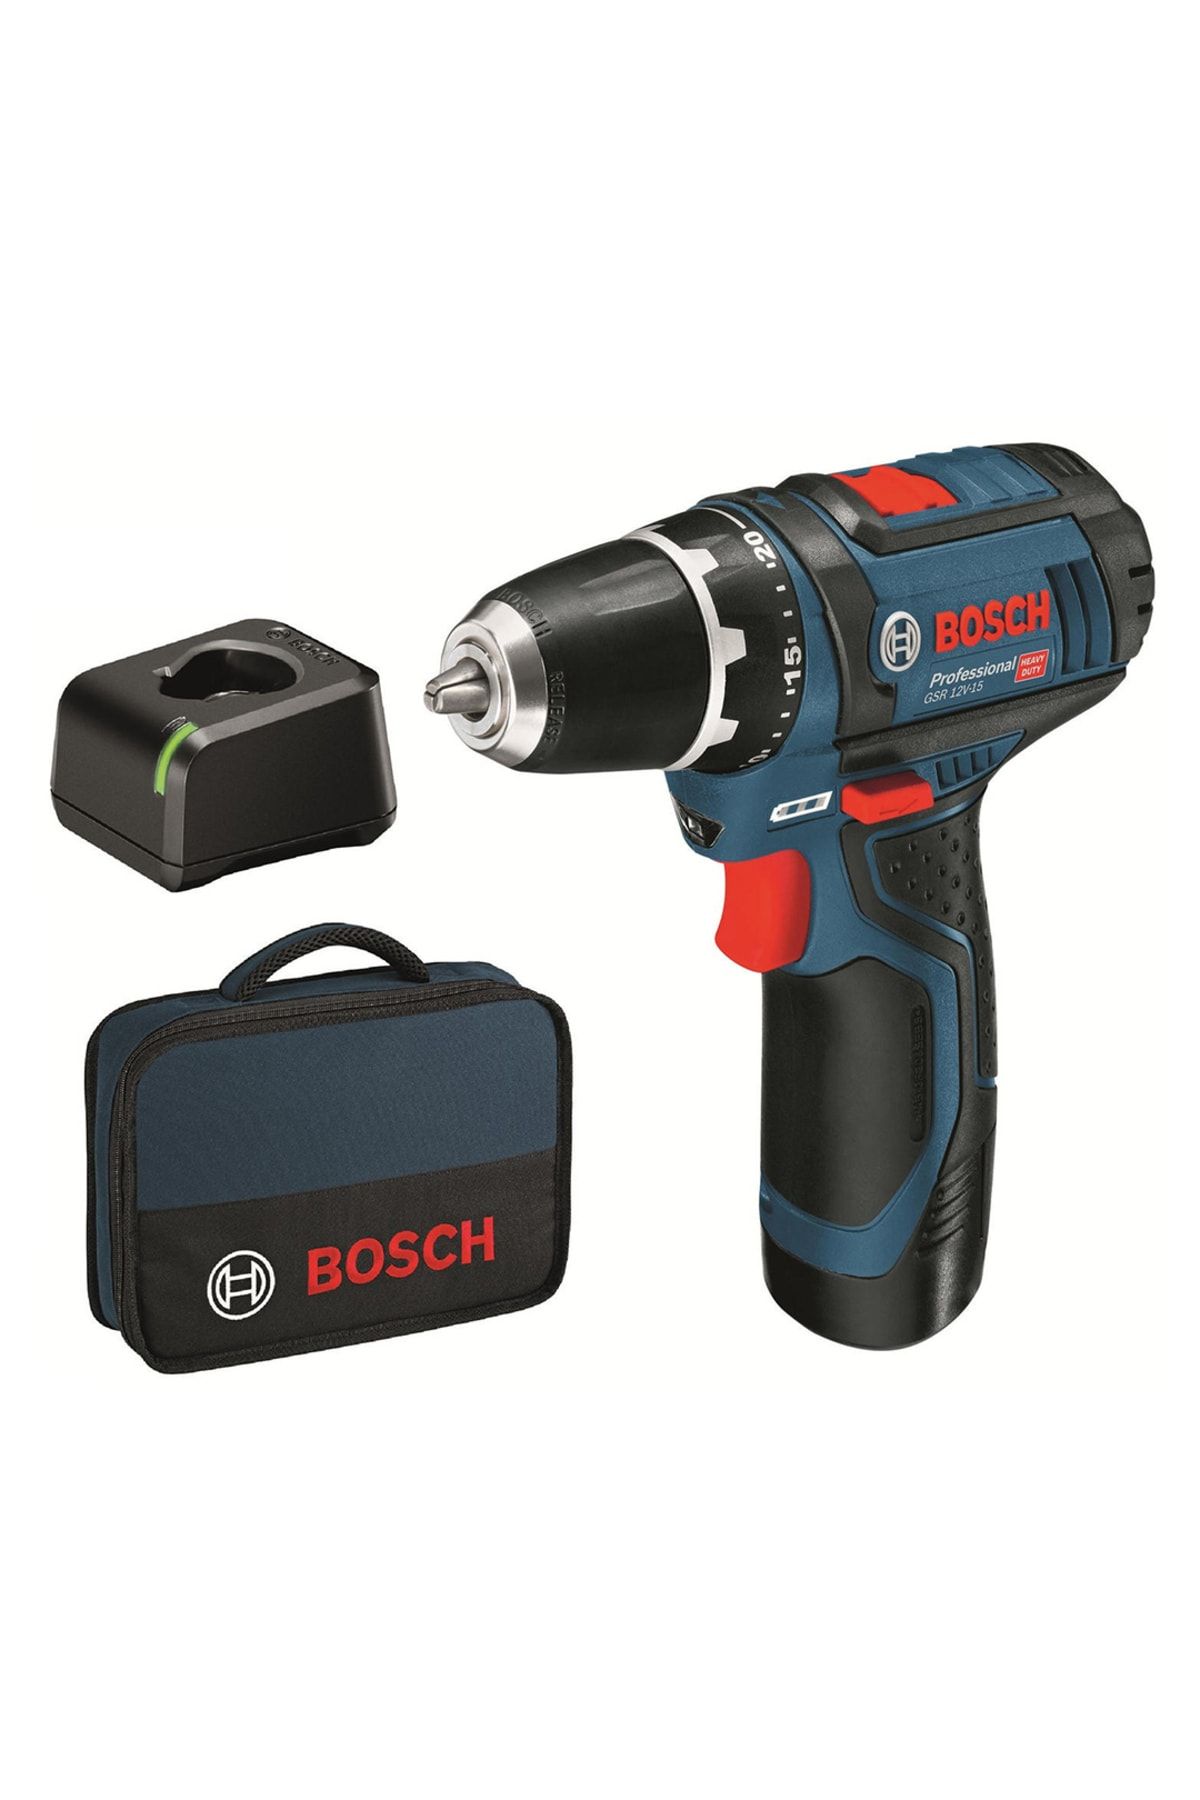 Bosch Professional Gsr 12v-15 2.0 Ah Tek Akülü Delme Vidalama Makinesi - 0615990l5g